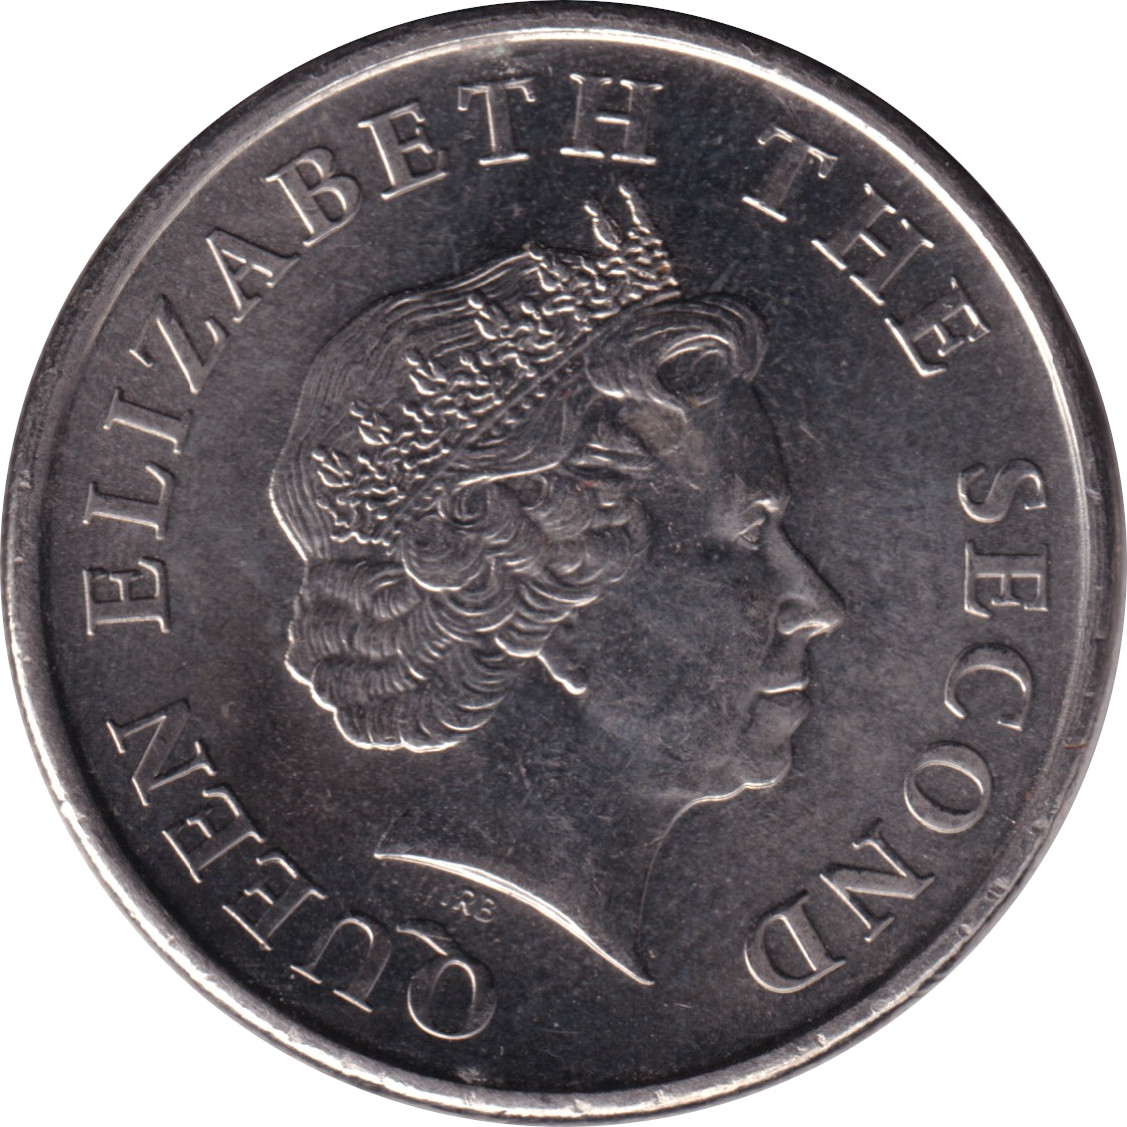 25 cents - Elizabeth II - Old head